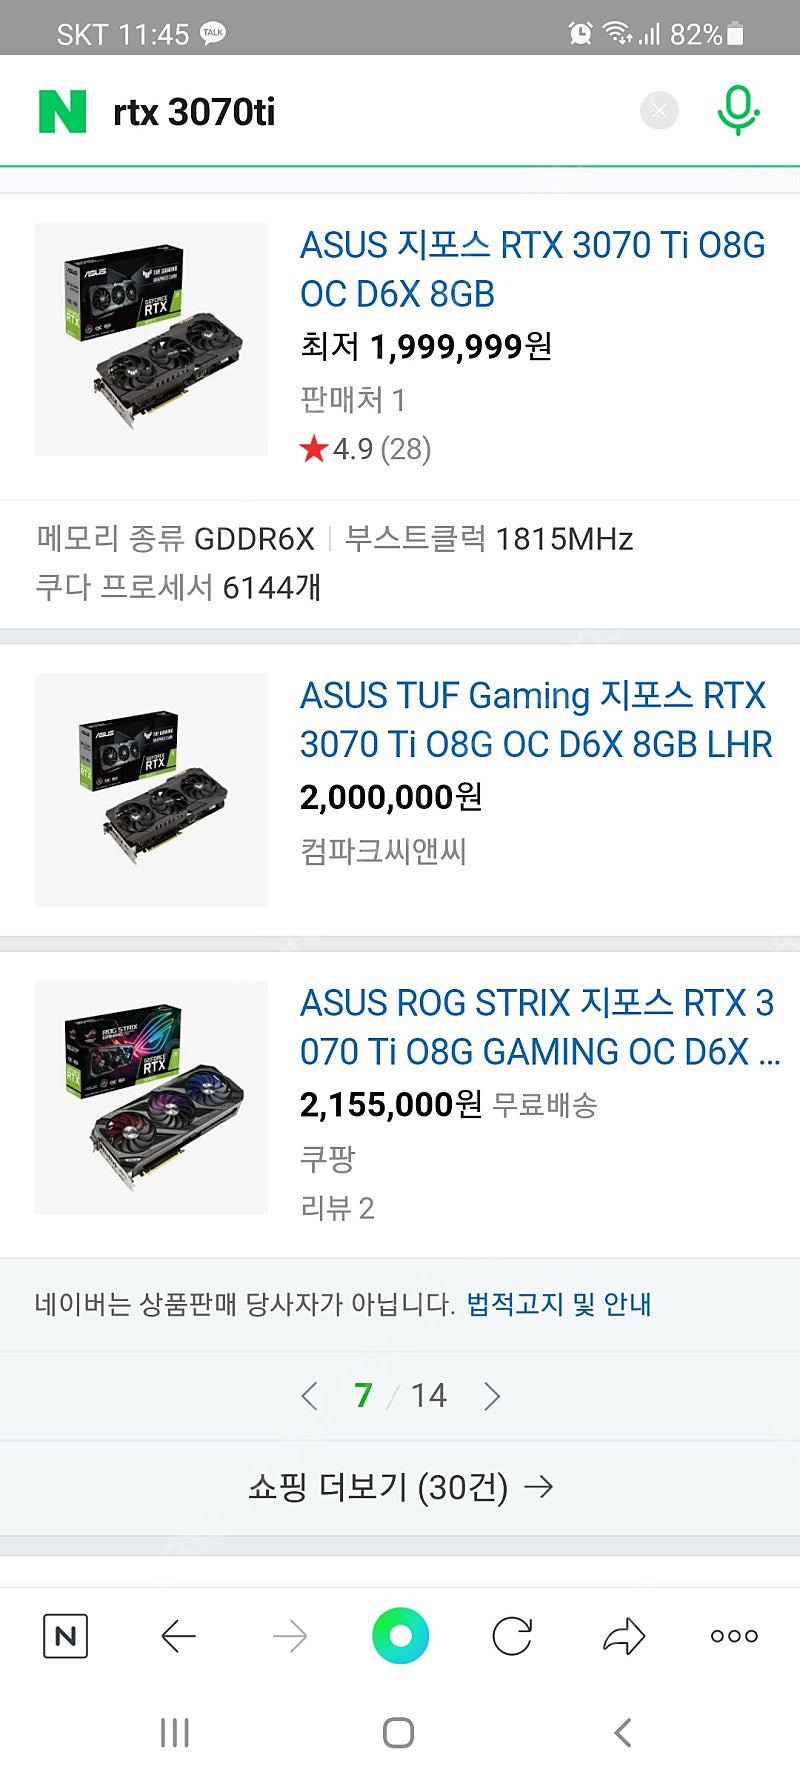 Asus Tuf RTX3070 ti 1,550,000 미개봉 판매합니다